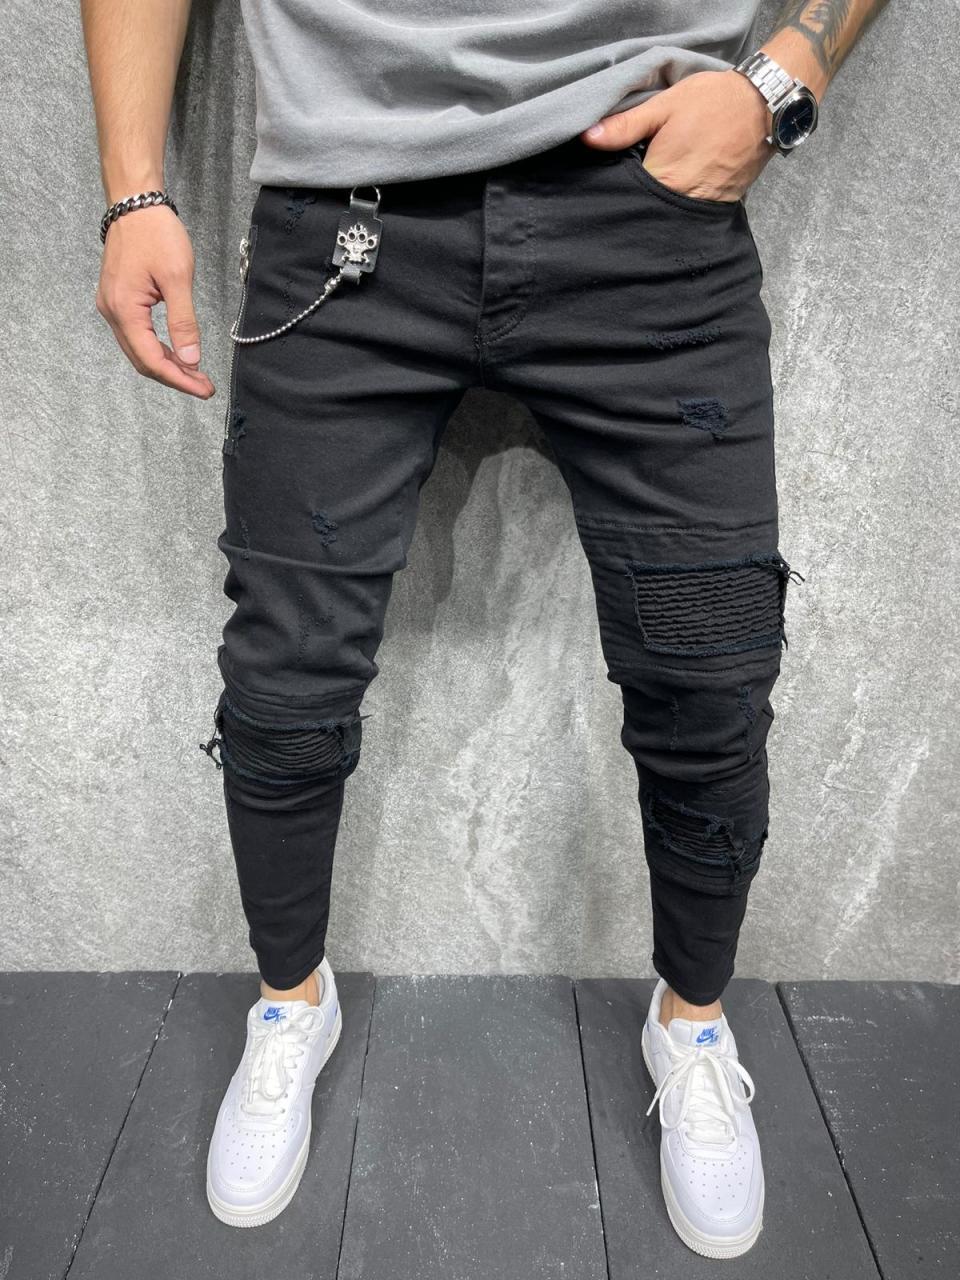 Premium Rail Pattern Chain Men's Jeans Black - STREETMODE ™